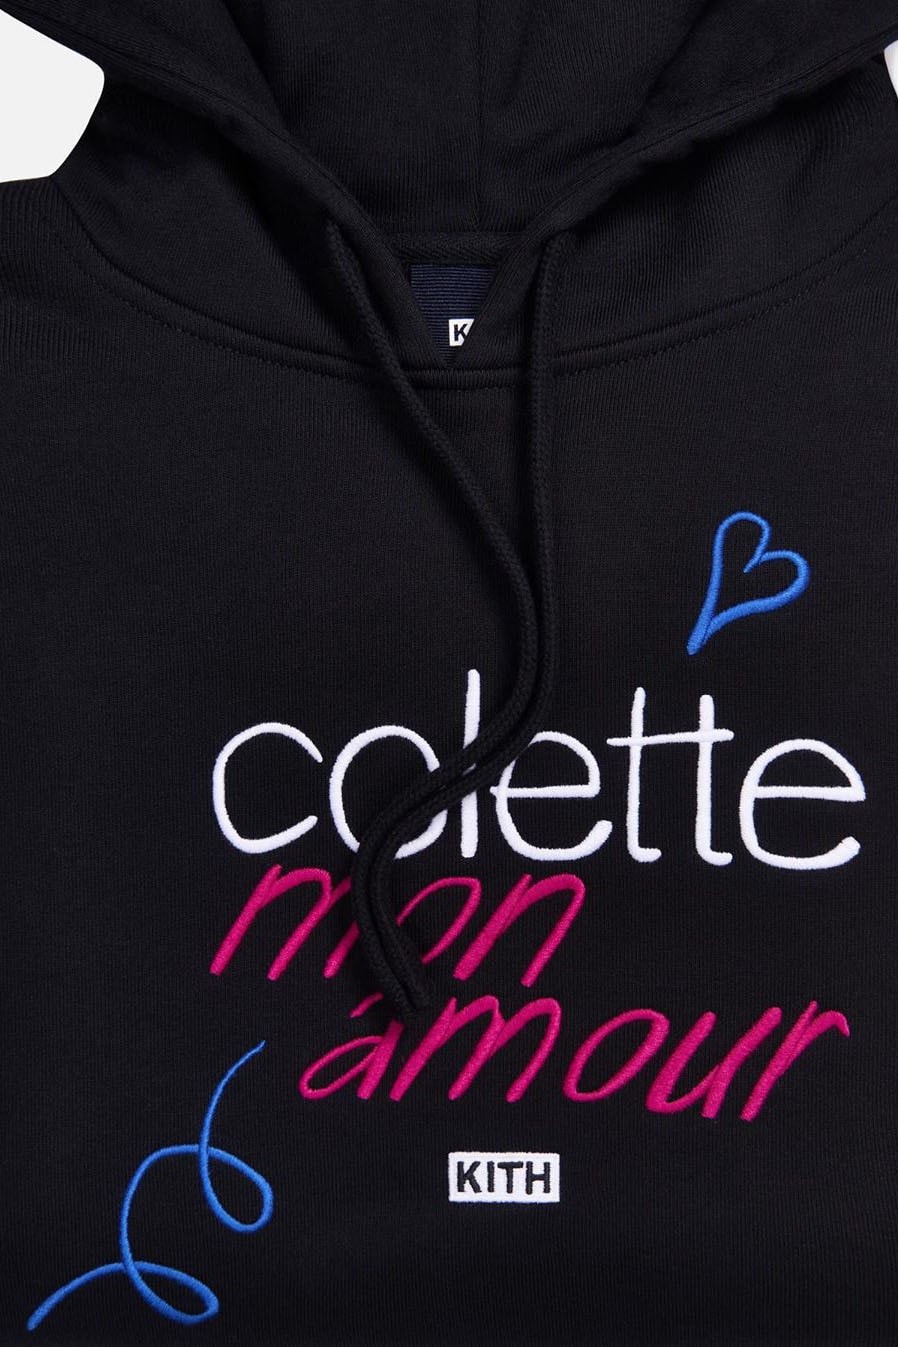 colette x KITH 聯手推出紀錄片《colette, mon amour》紀念連帽衛衣